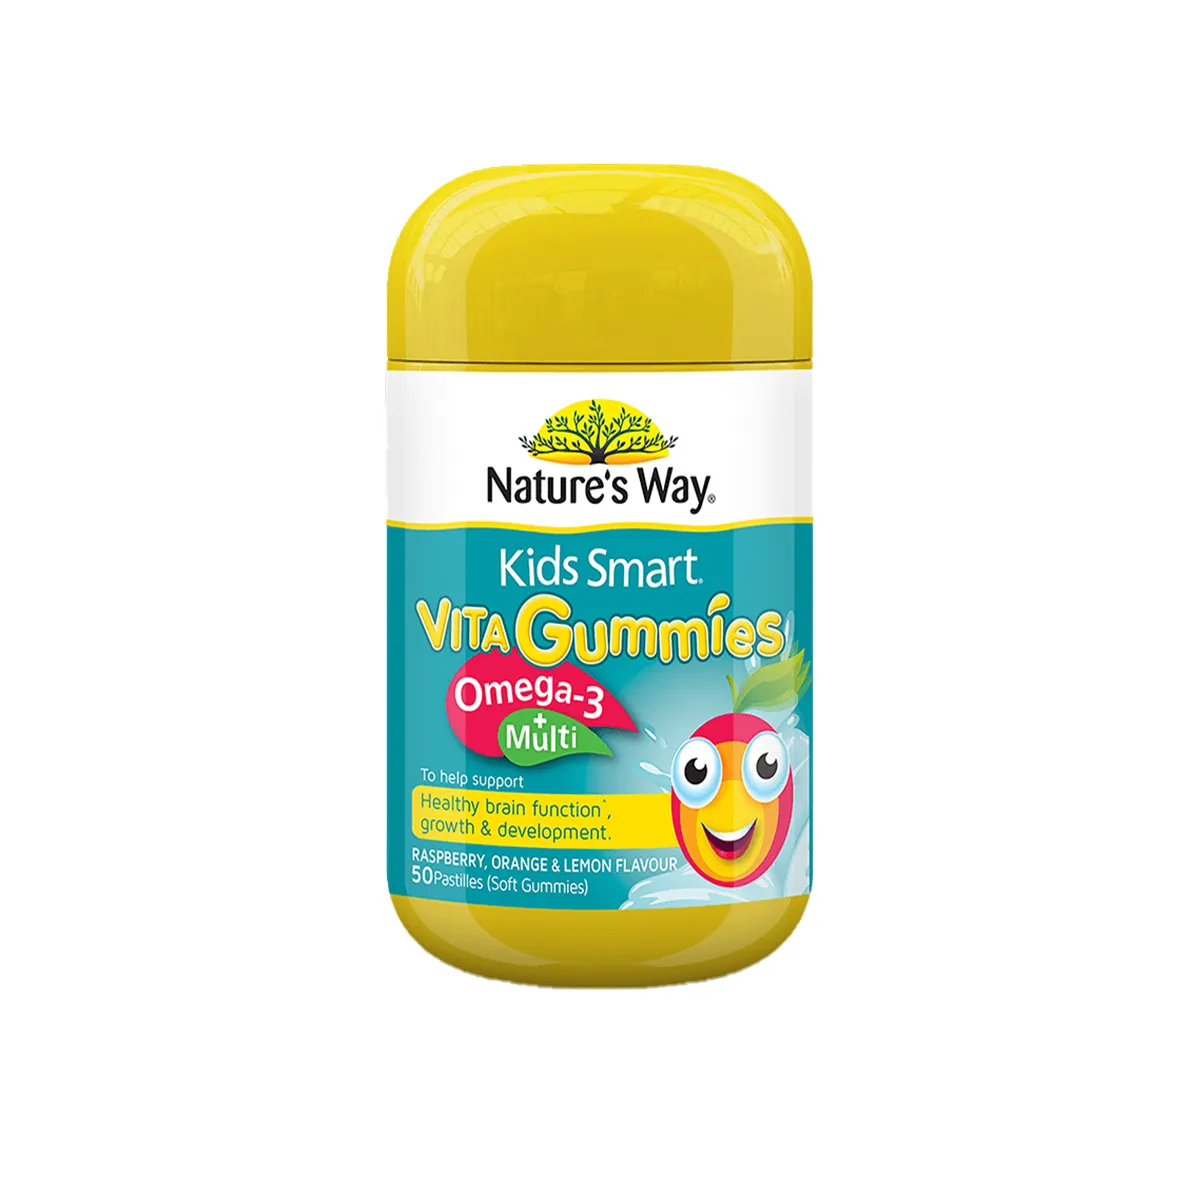 Nature’s Way Kids Smart Vita Omega-3+Multi Capsules 50s